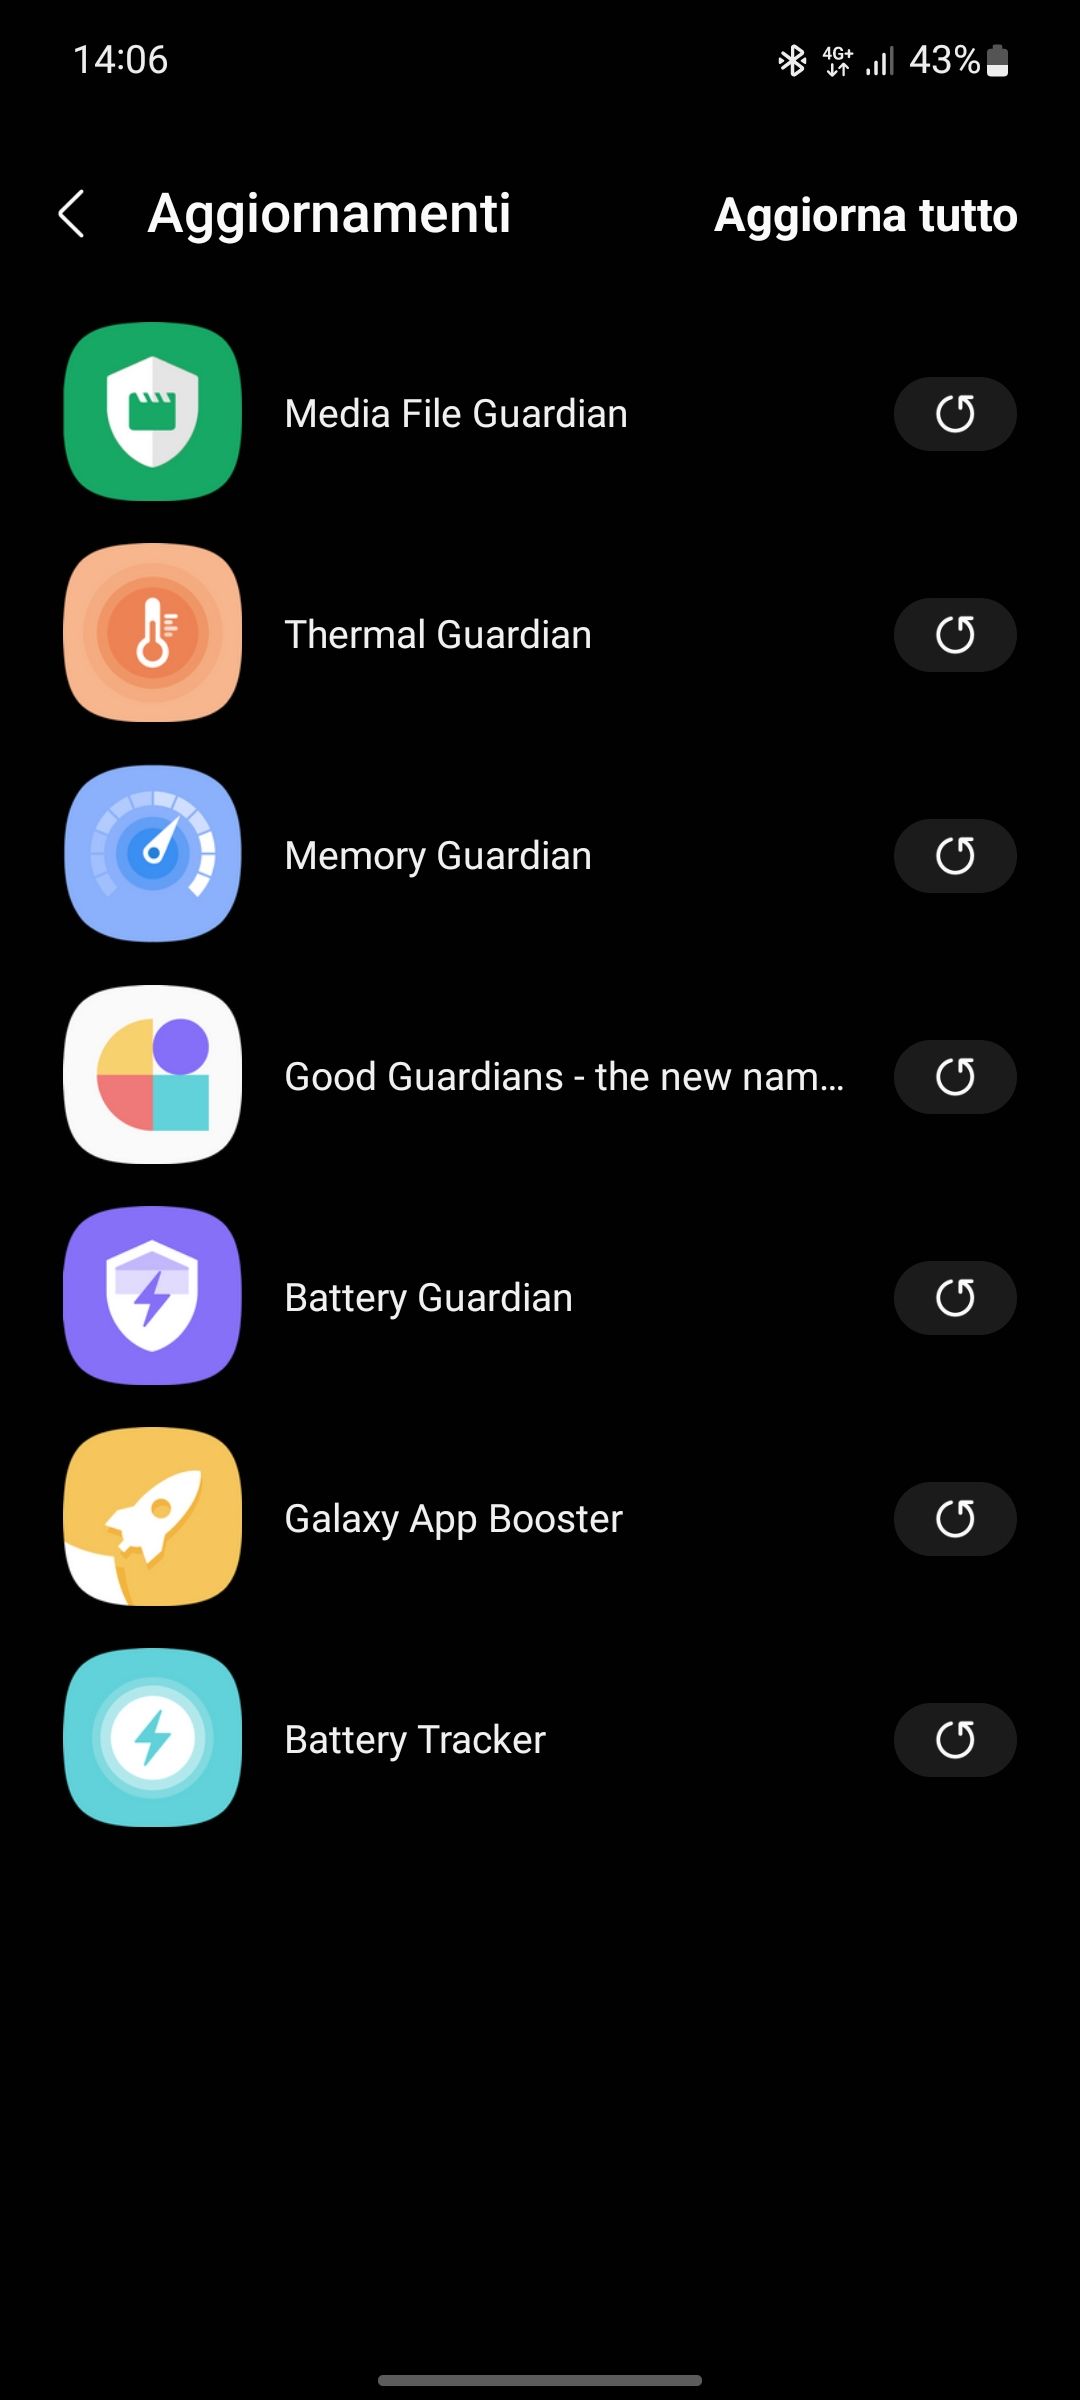 Good guardians - Samsung Community